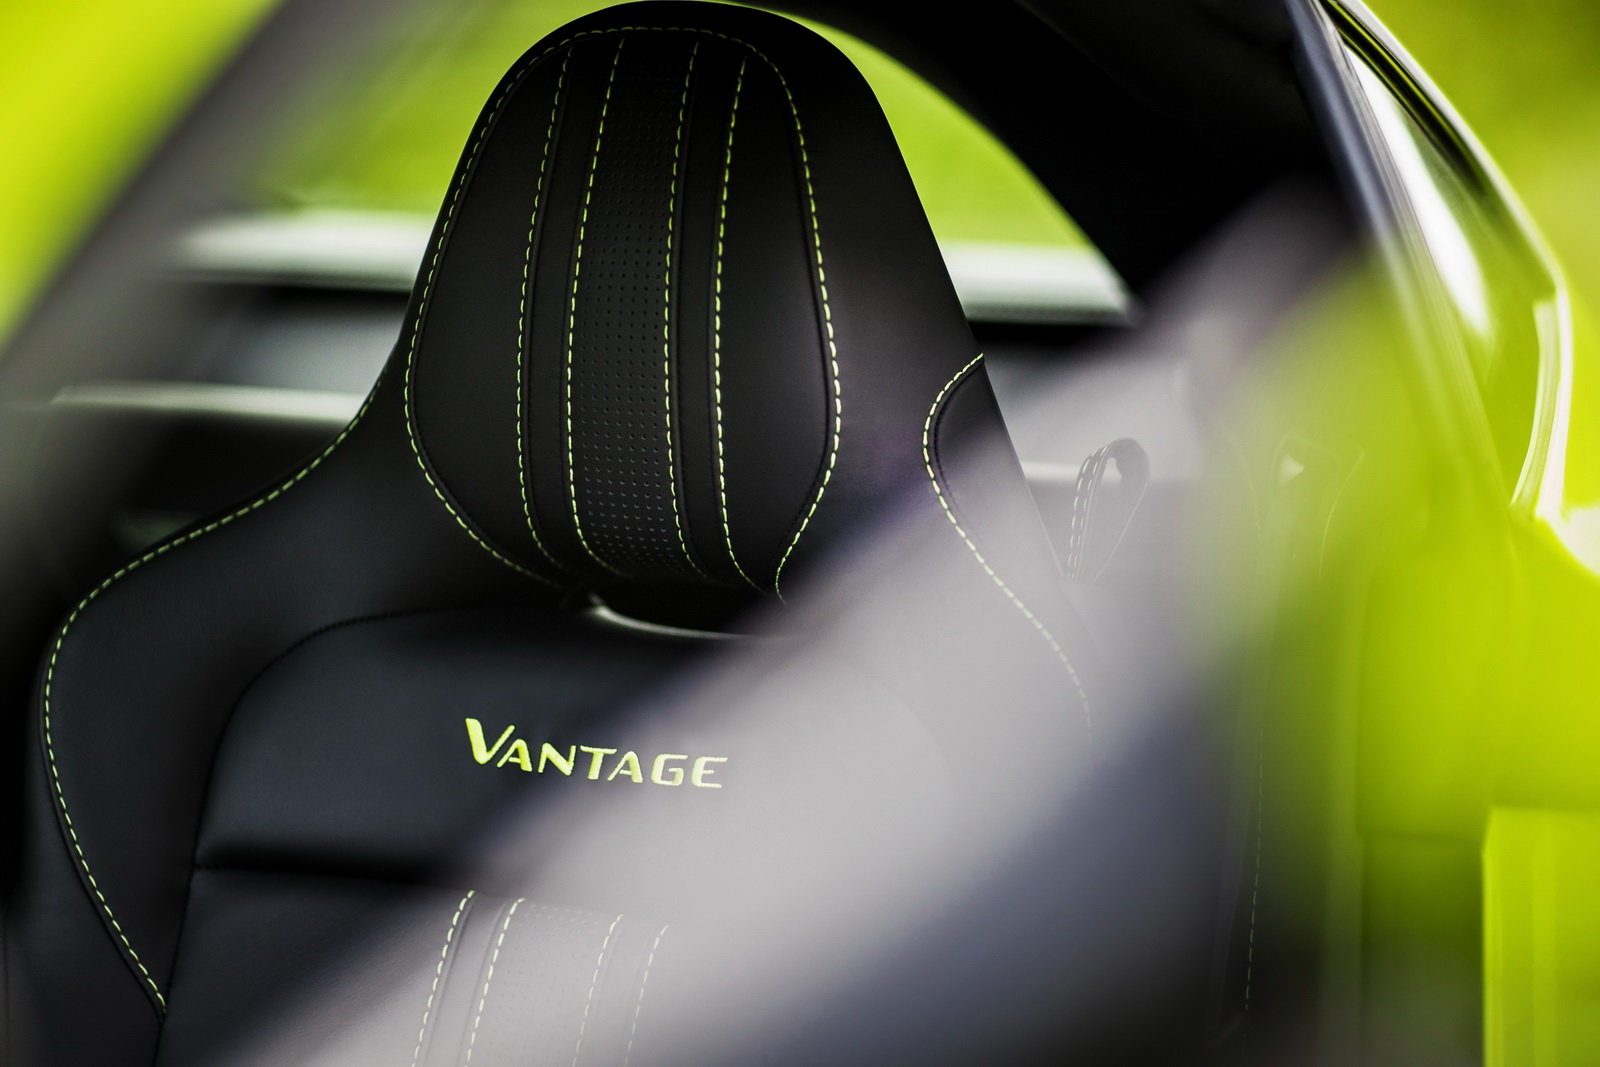 Nový Aston Martin Vantage